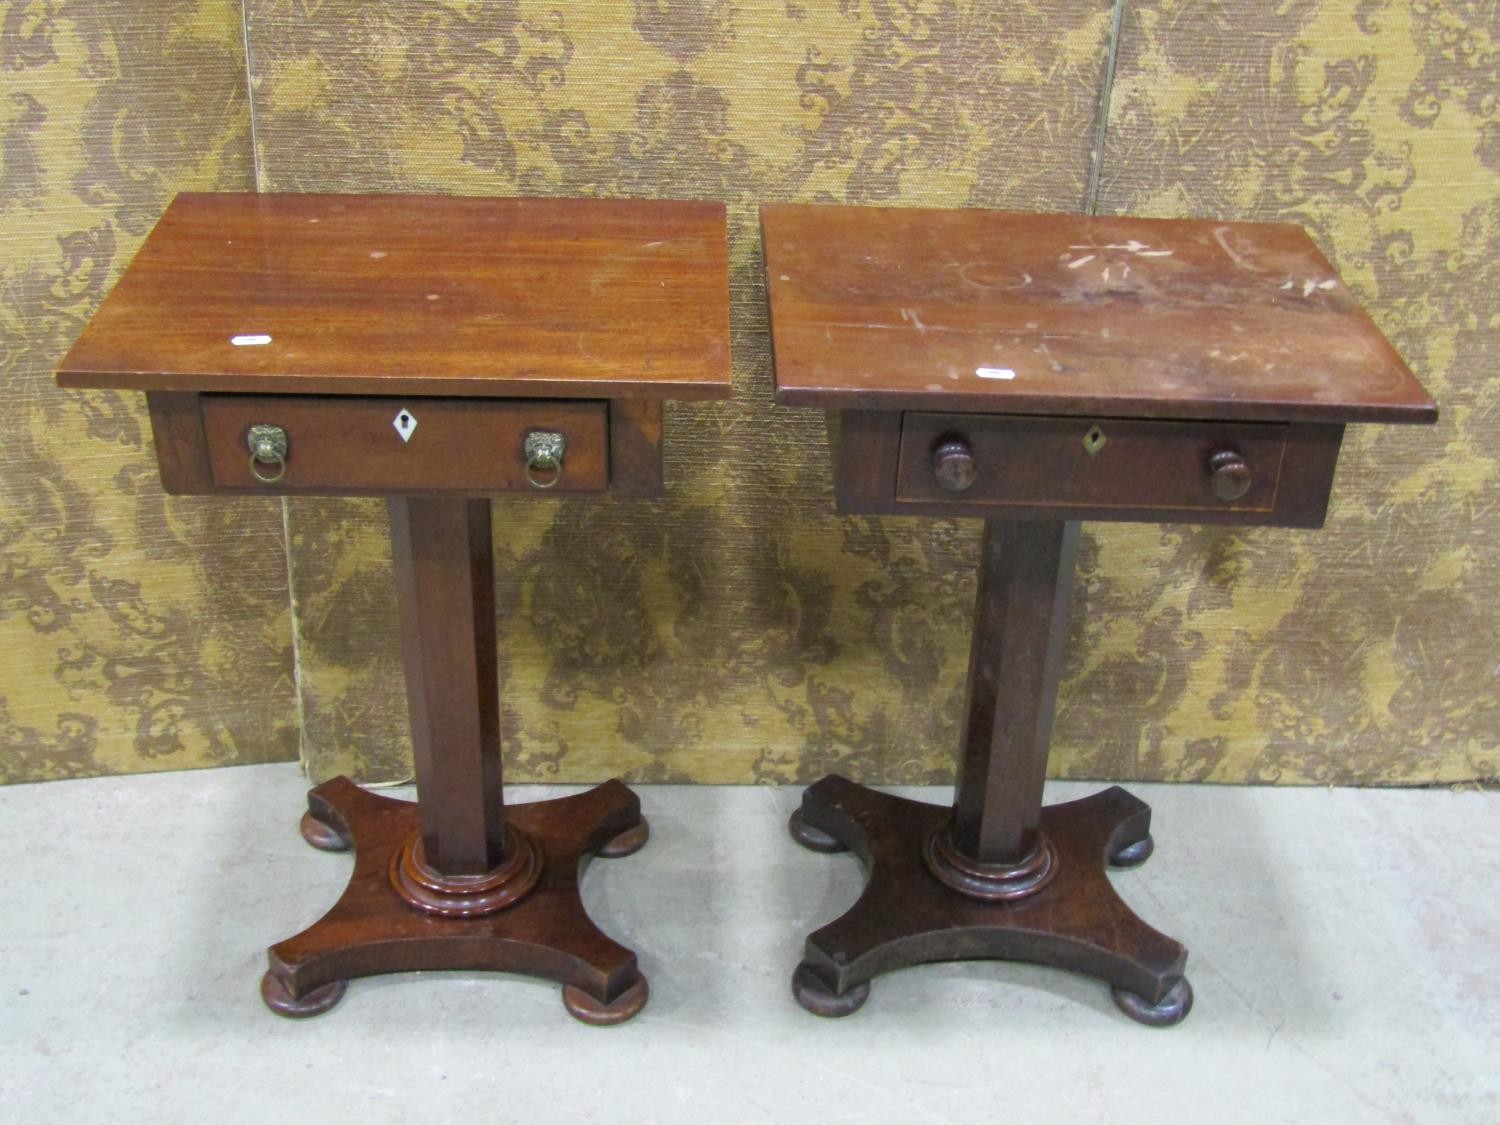 Two similar pedestal tables, each enclosing a single drawer on platform bases